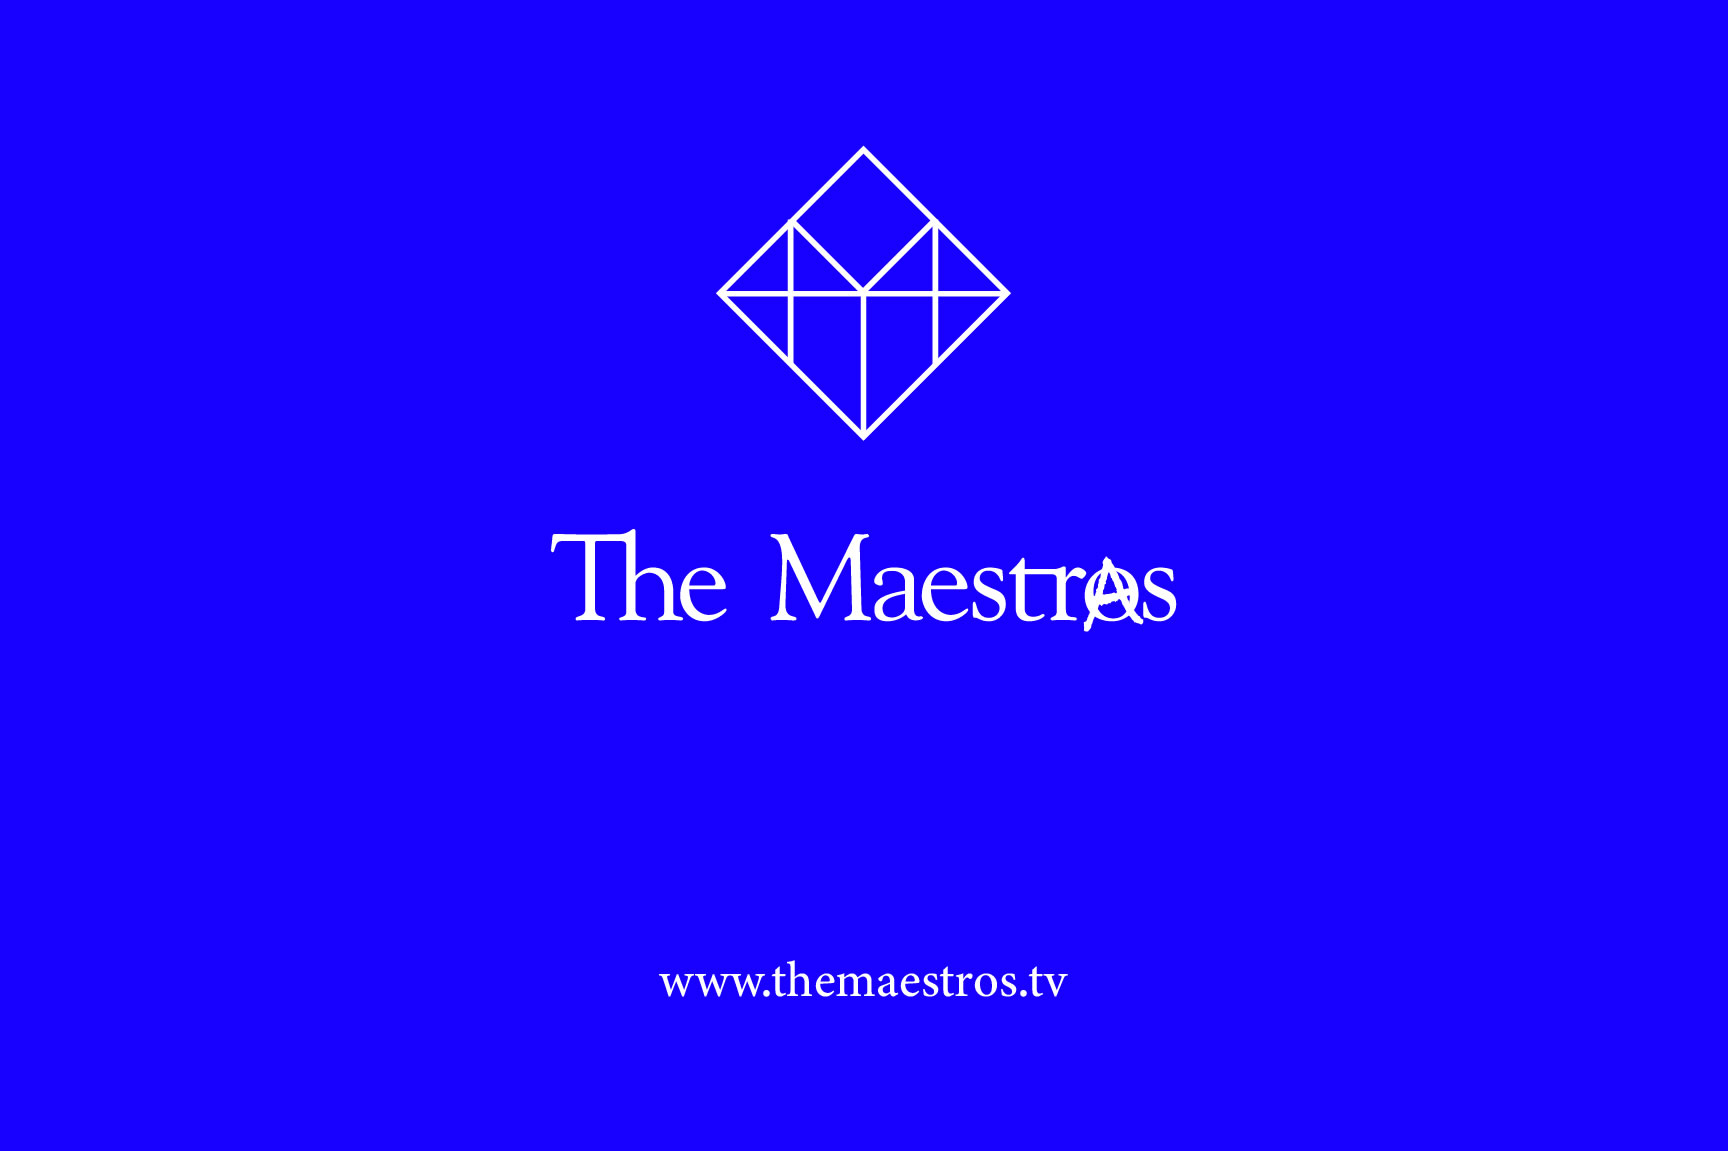 The Maestros/Terán